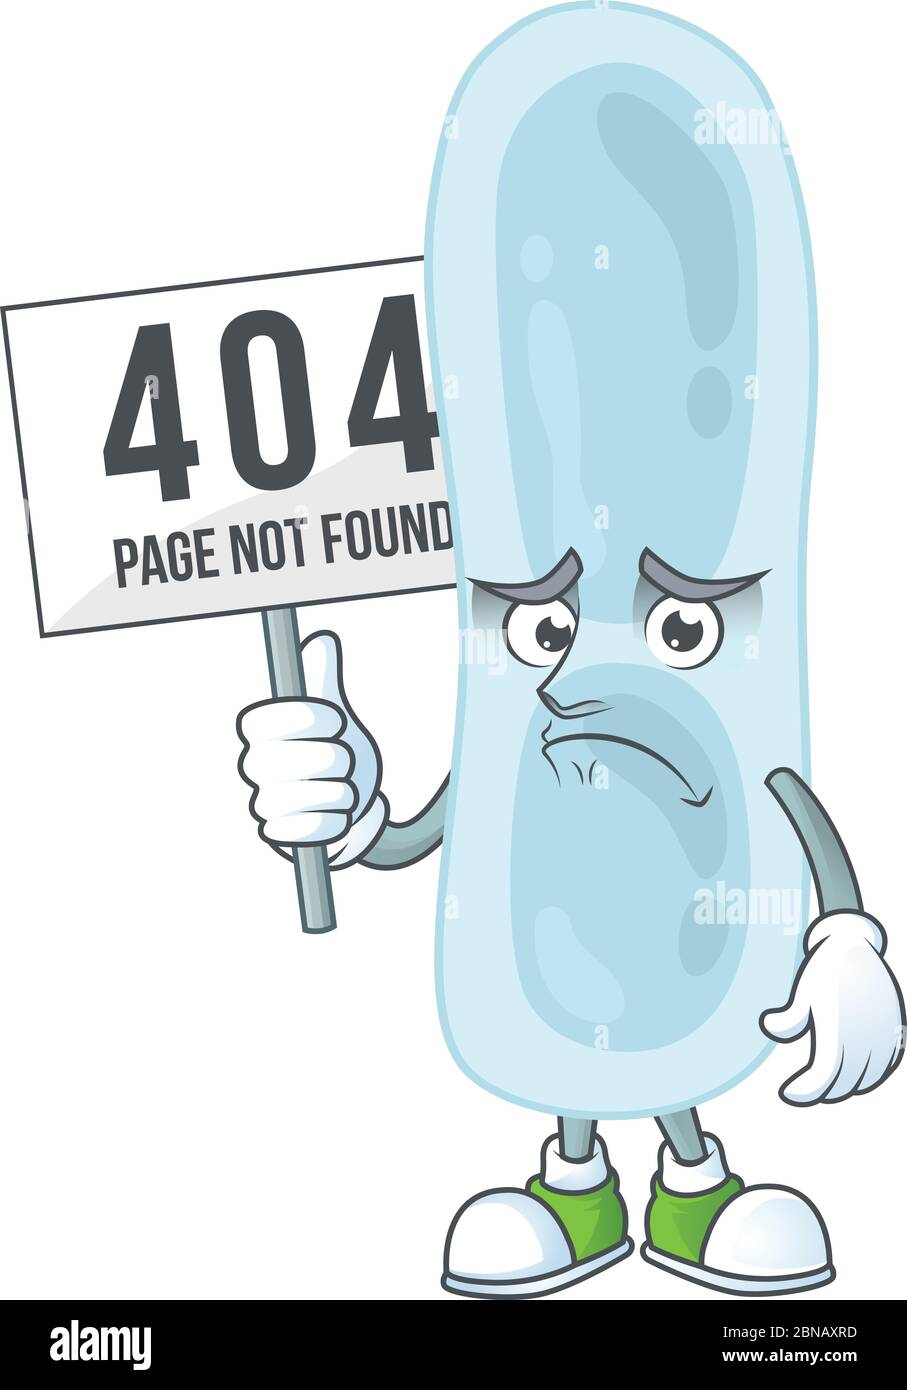 gloomy face of klebsiella pneumoniae cartoon character with 404 boards Stock Vector